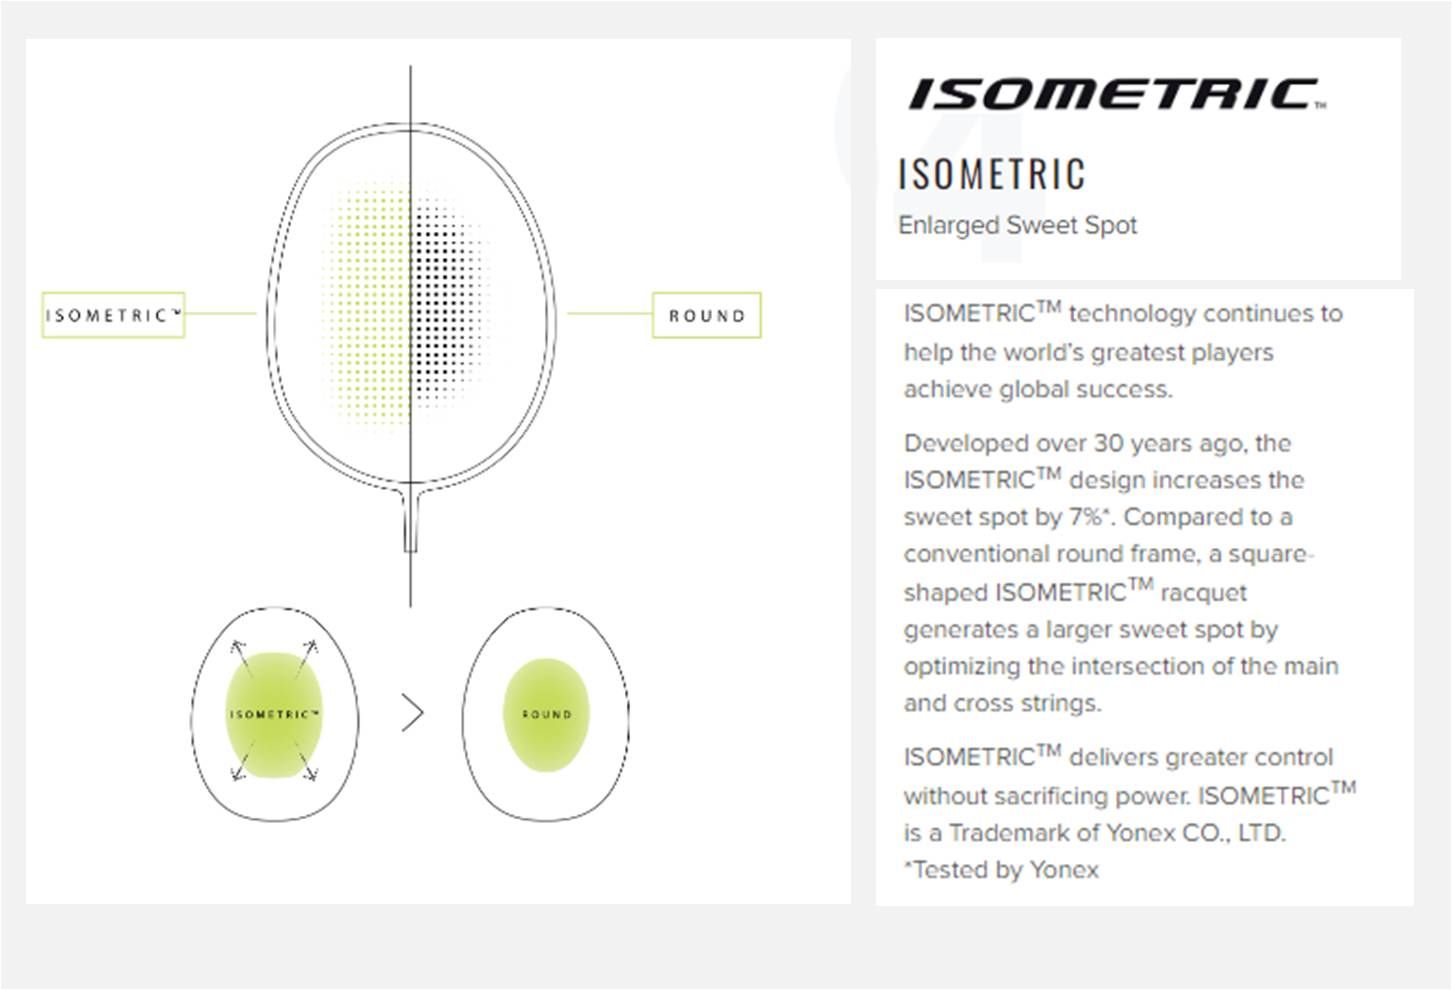 YONEX_ASTROX_100_TOUR_isometric_technology_khelmart.jpg